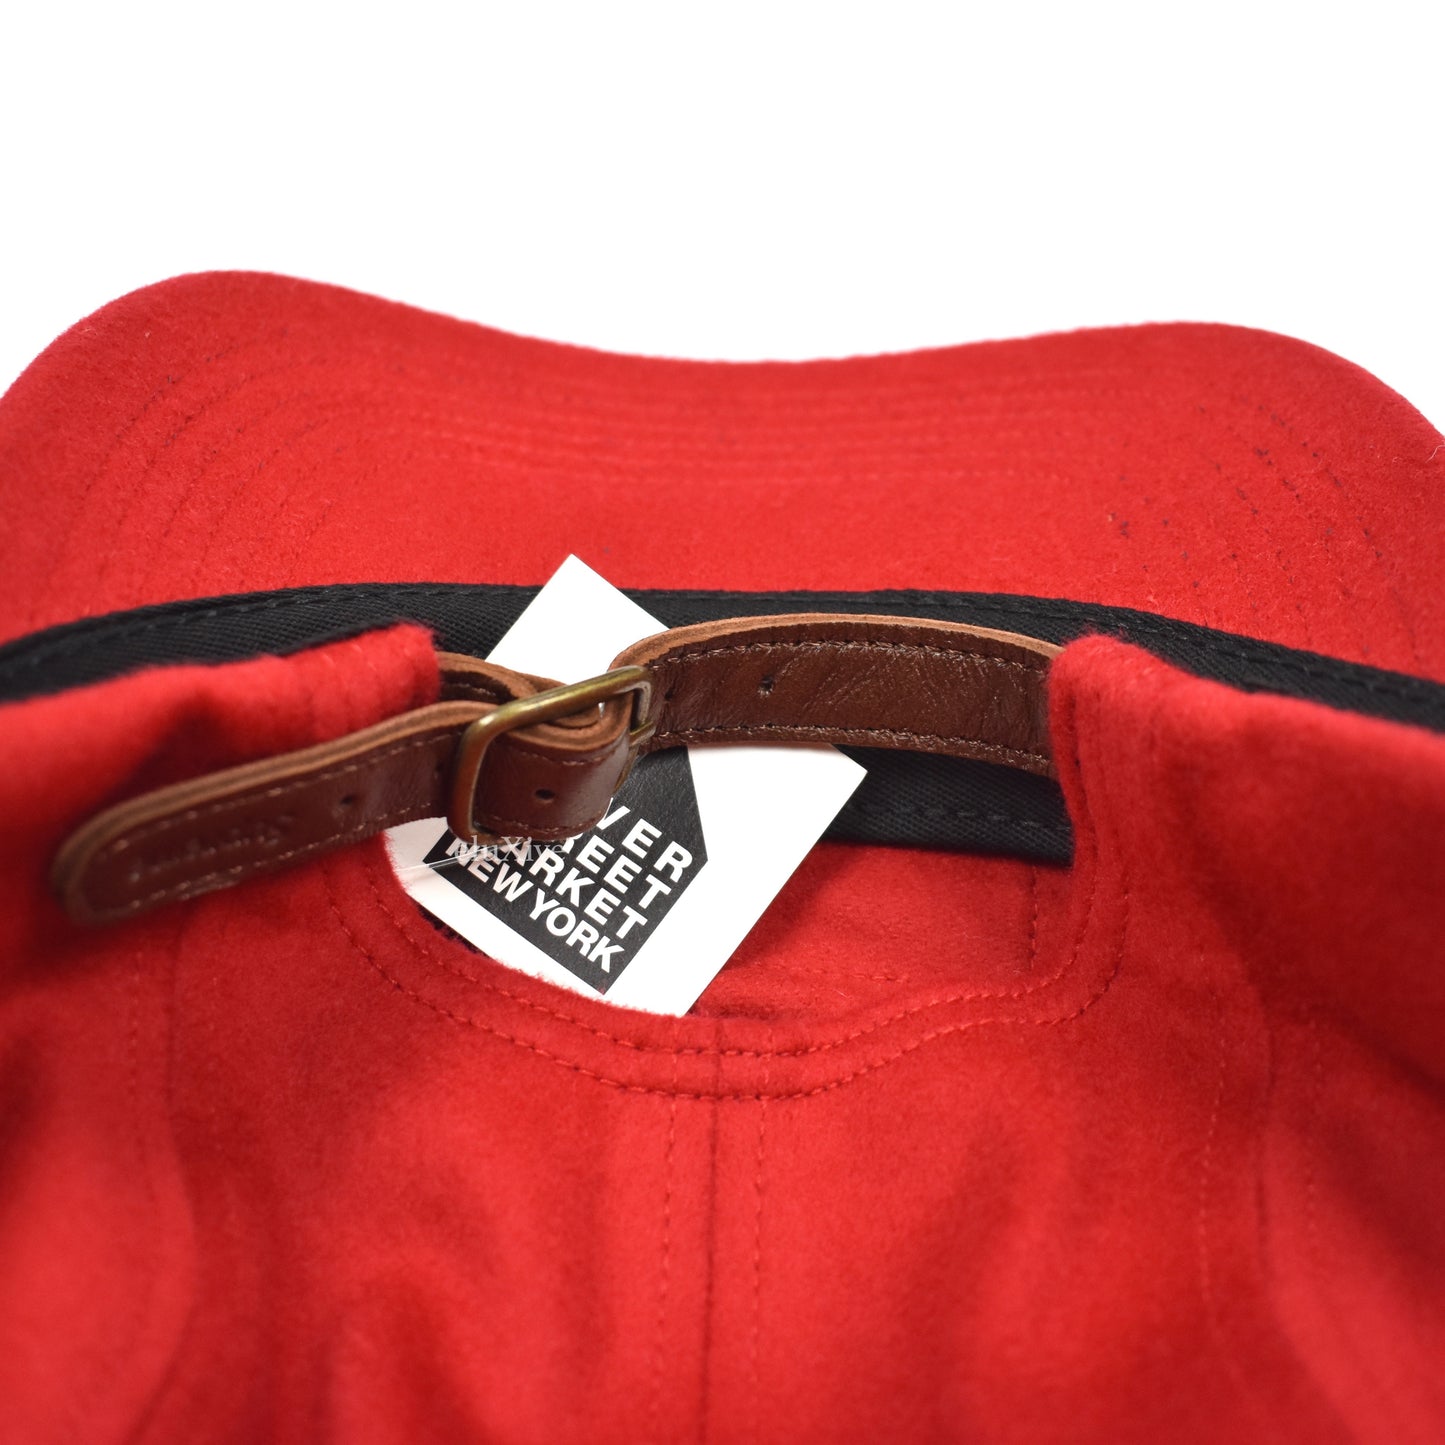 Supreme x Loro Piana - Red Wool Box Logo Hat (FW20)